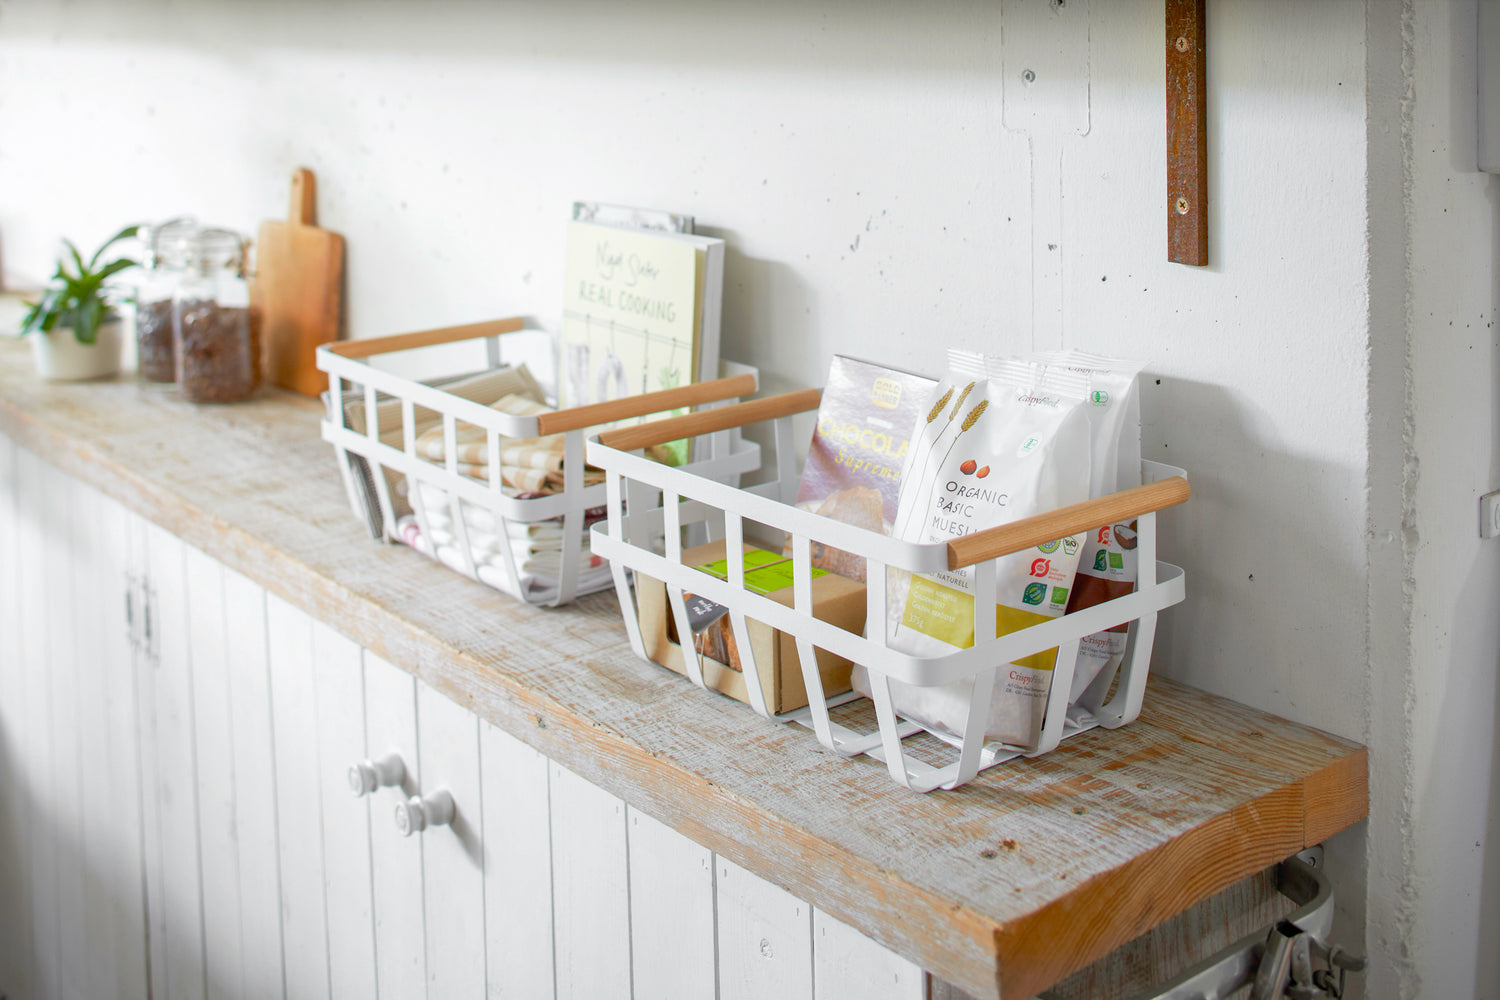 View 9 - Storage Basket containing food items on shelf by Yamazaki Home.